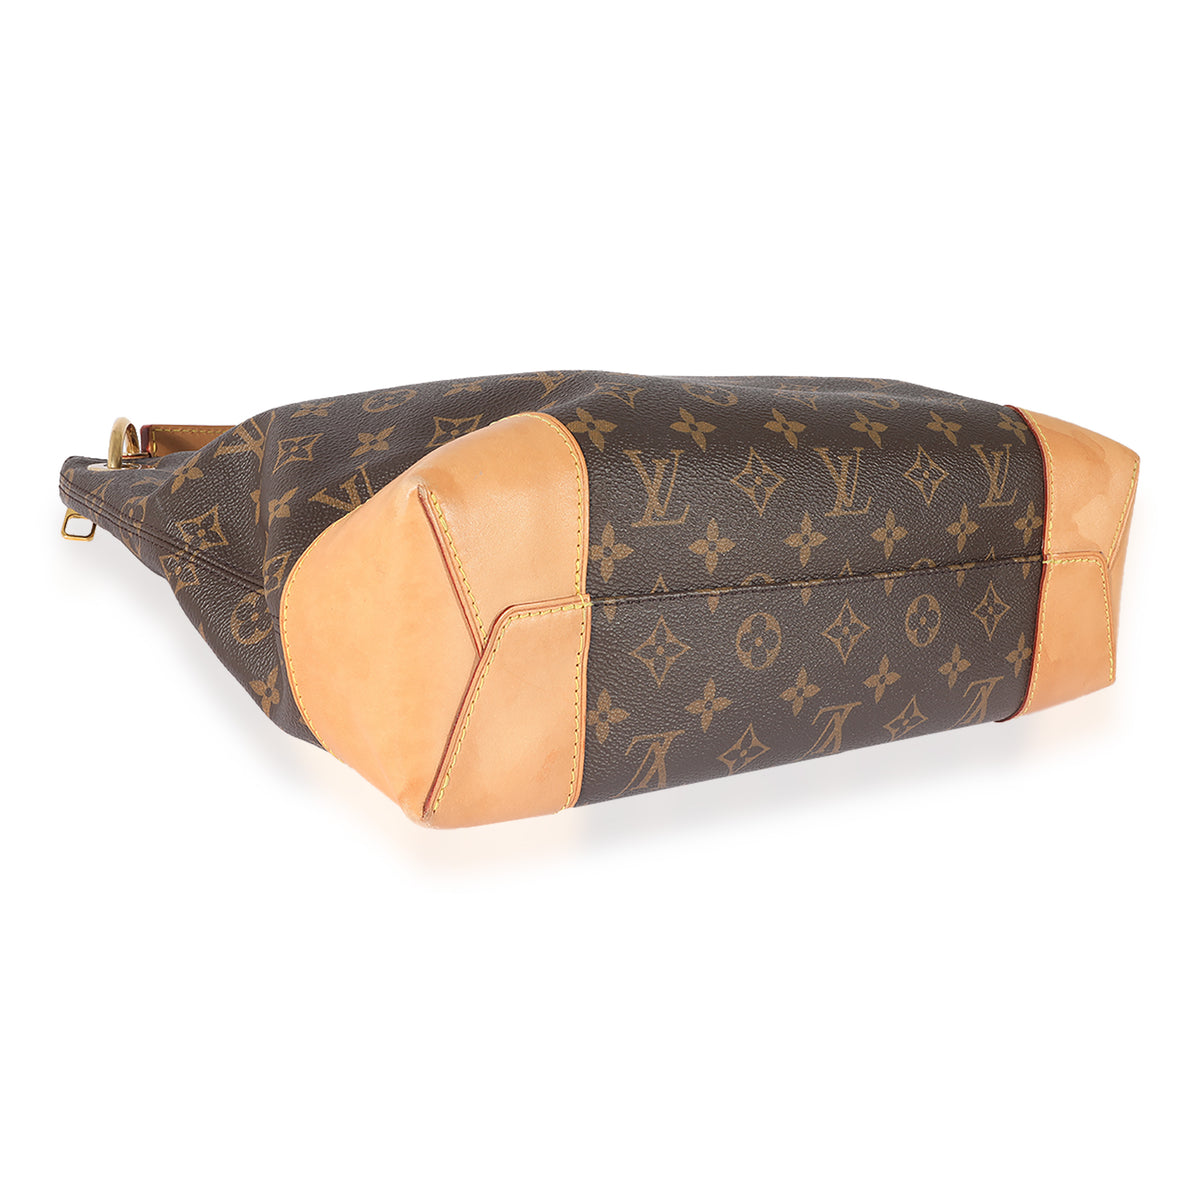 Birthday Bag / Louis Vuitton Berri MM 